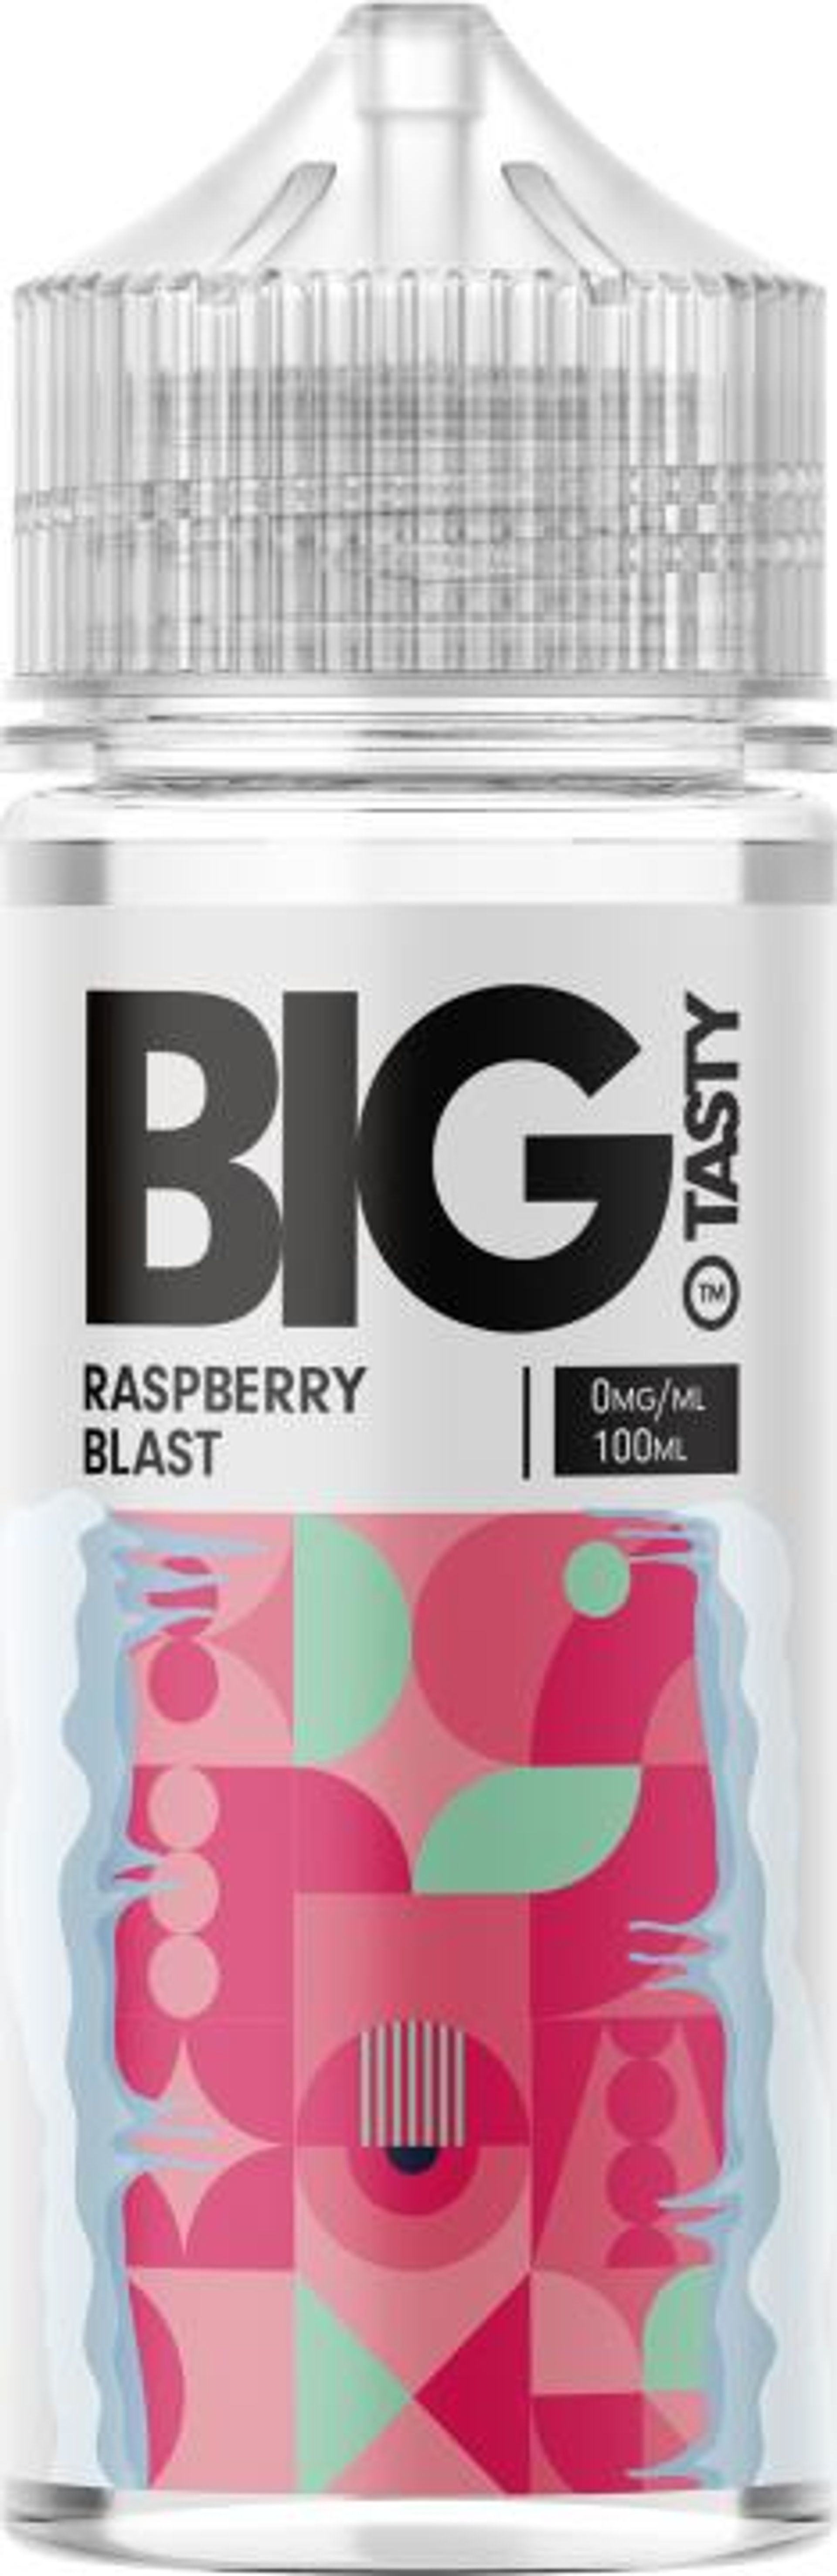 Image of Raspberry Blast by Big Tasty